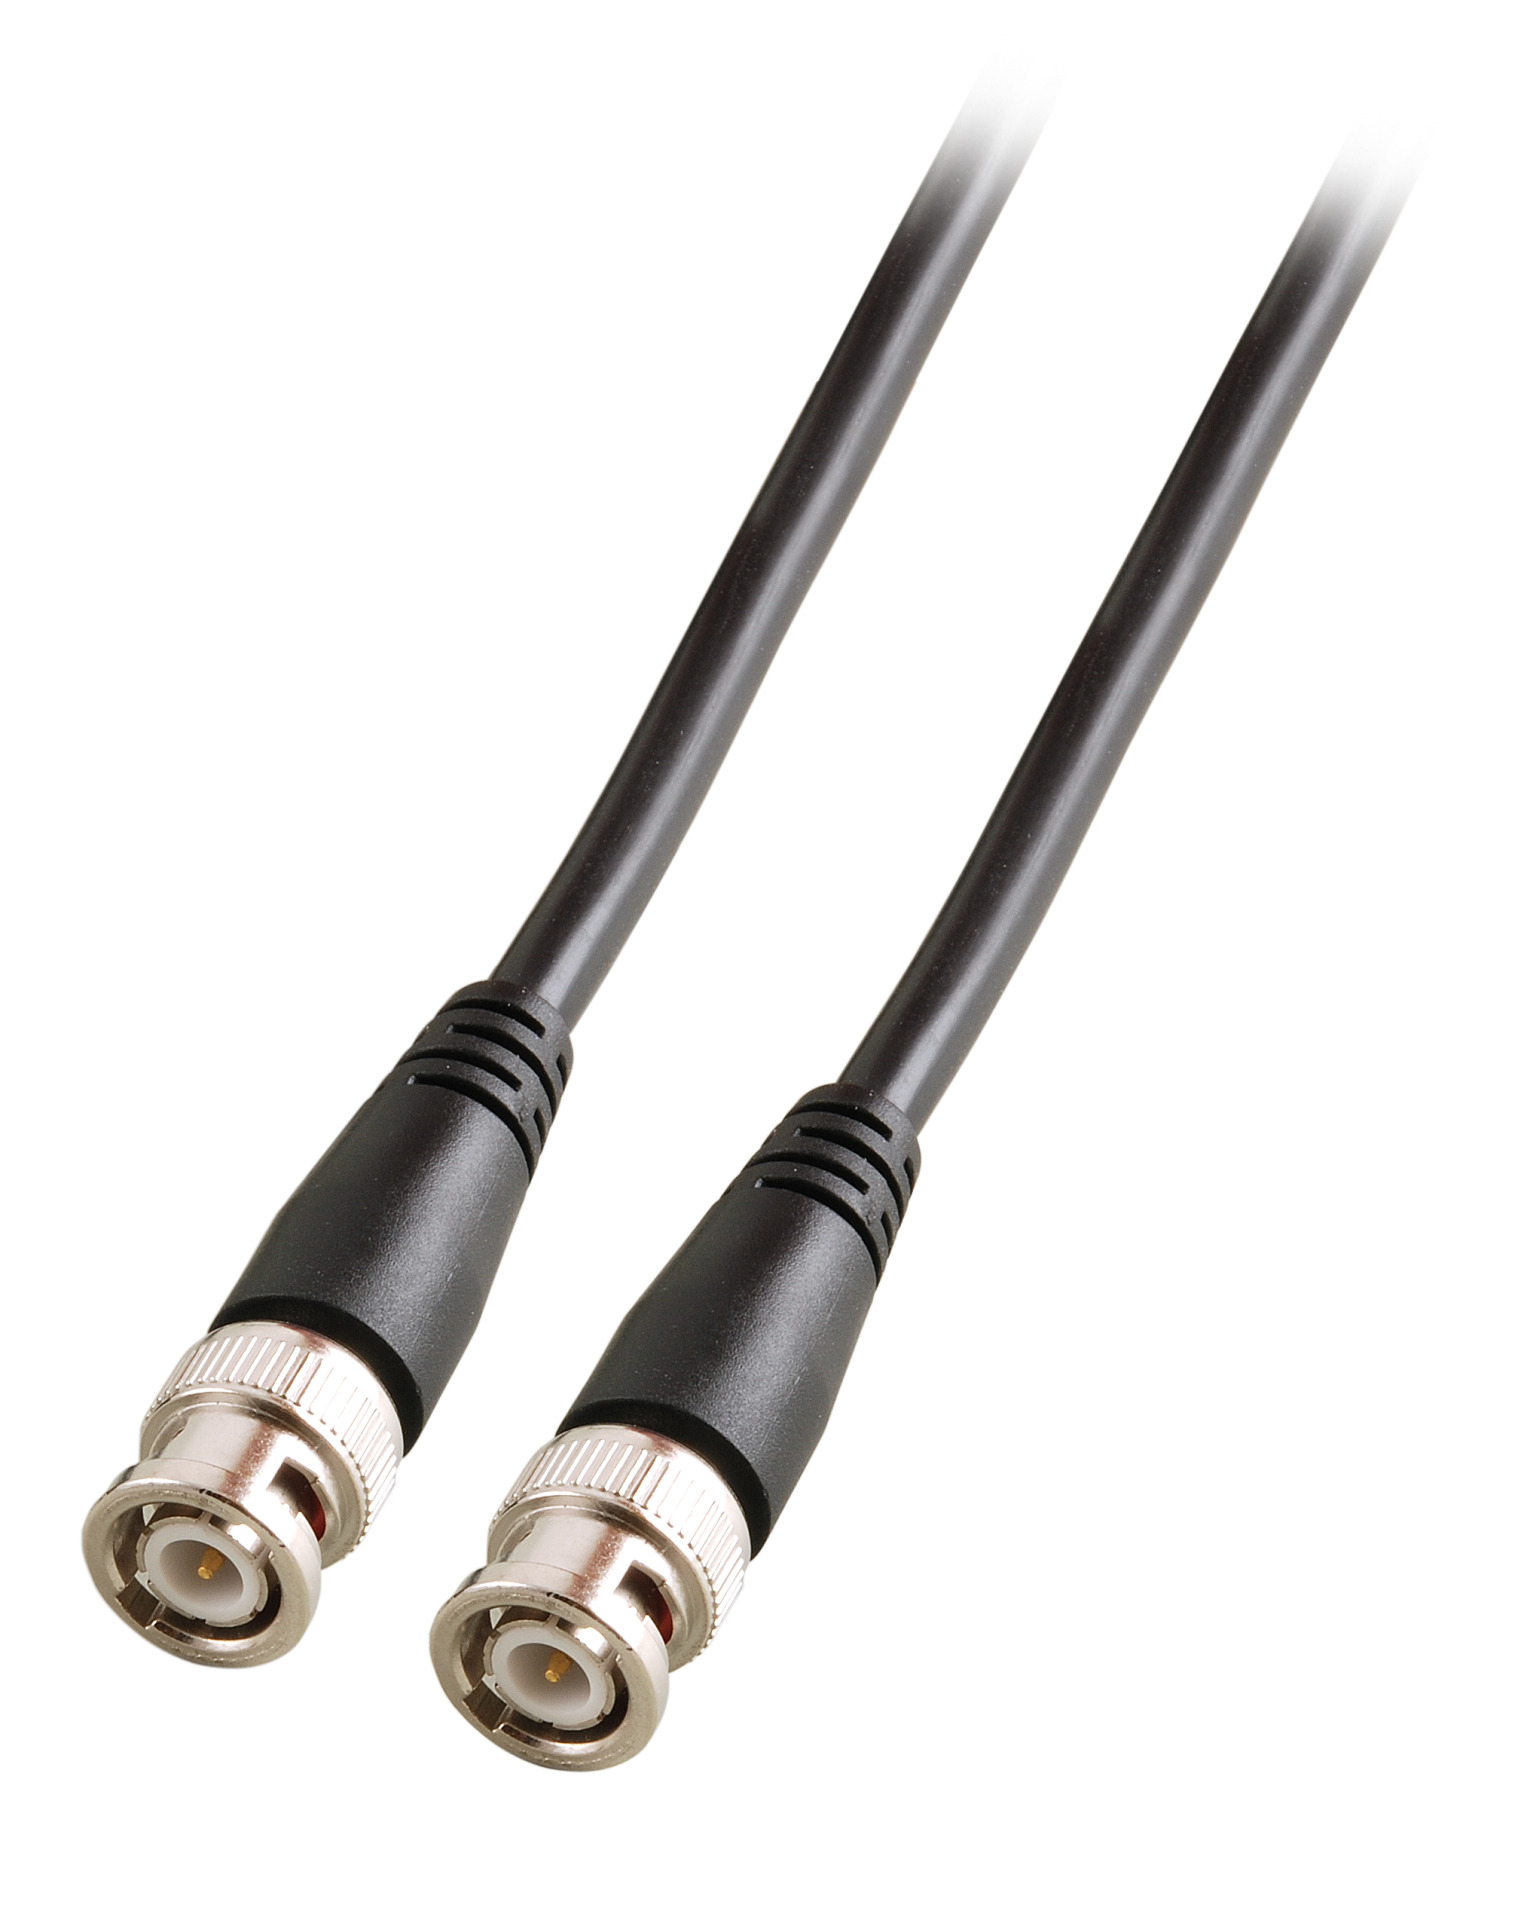 Coaxial cable RG59 B/U 75 Ohm, 2 x straight plugs, 3.0m